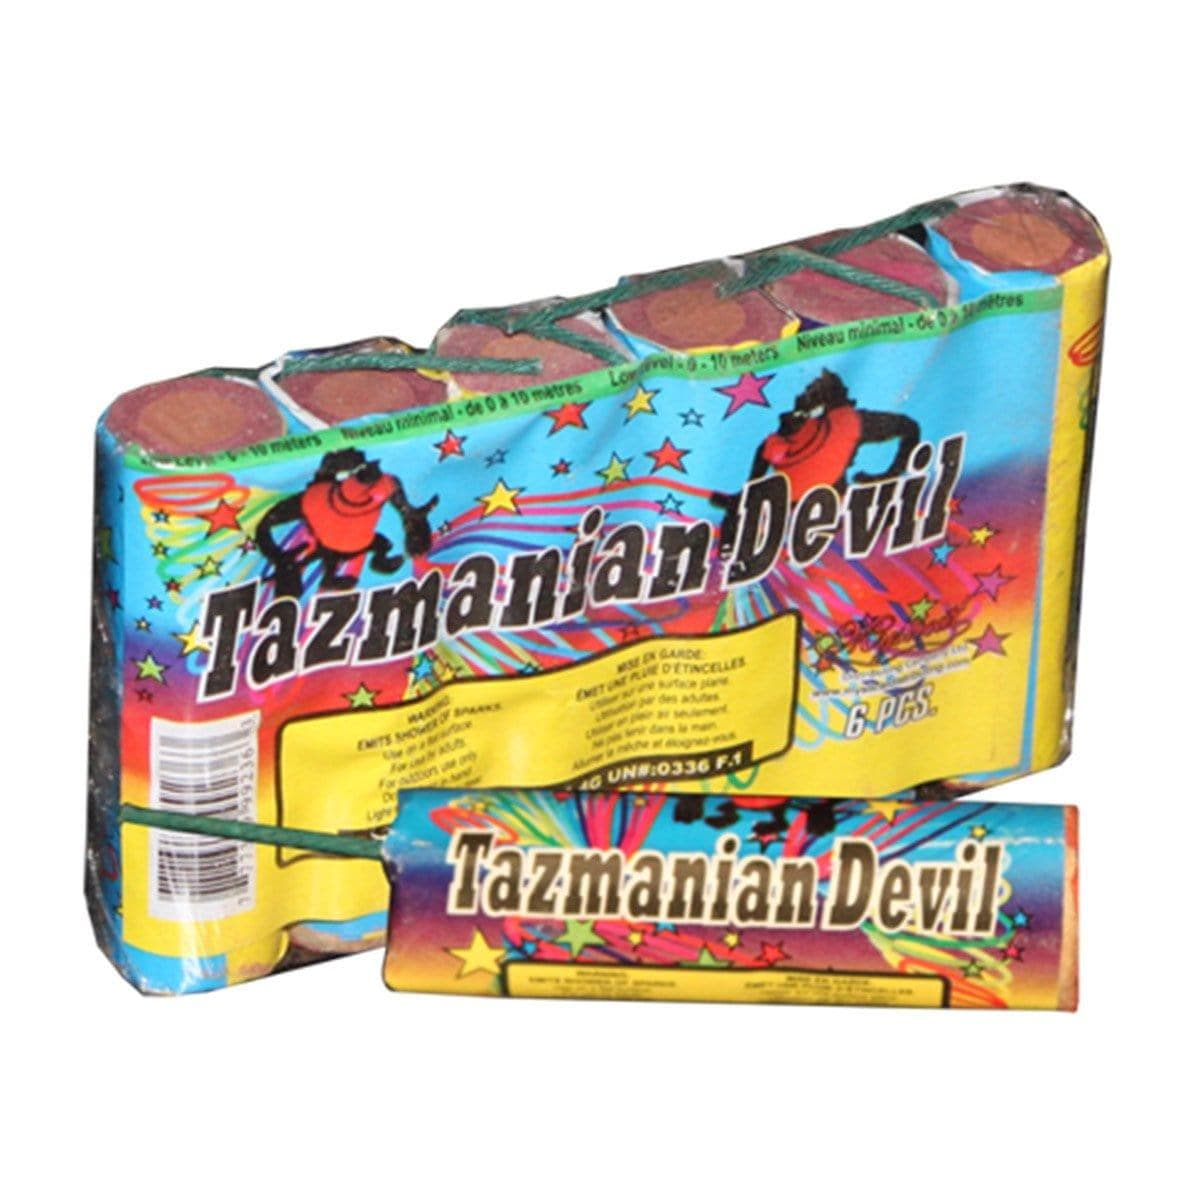 Buy Fireworks Tazmanian Devil sold at Party Expert